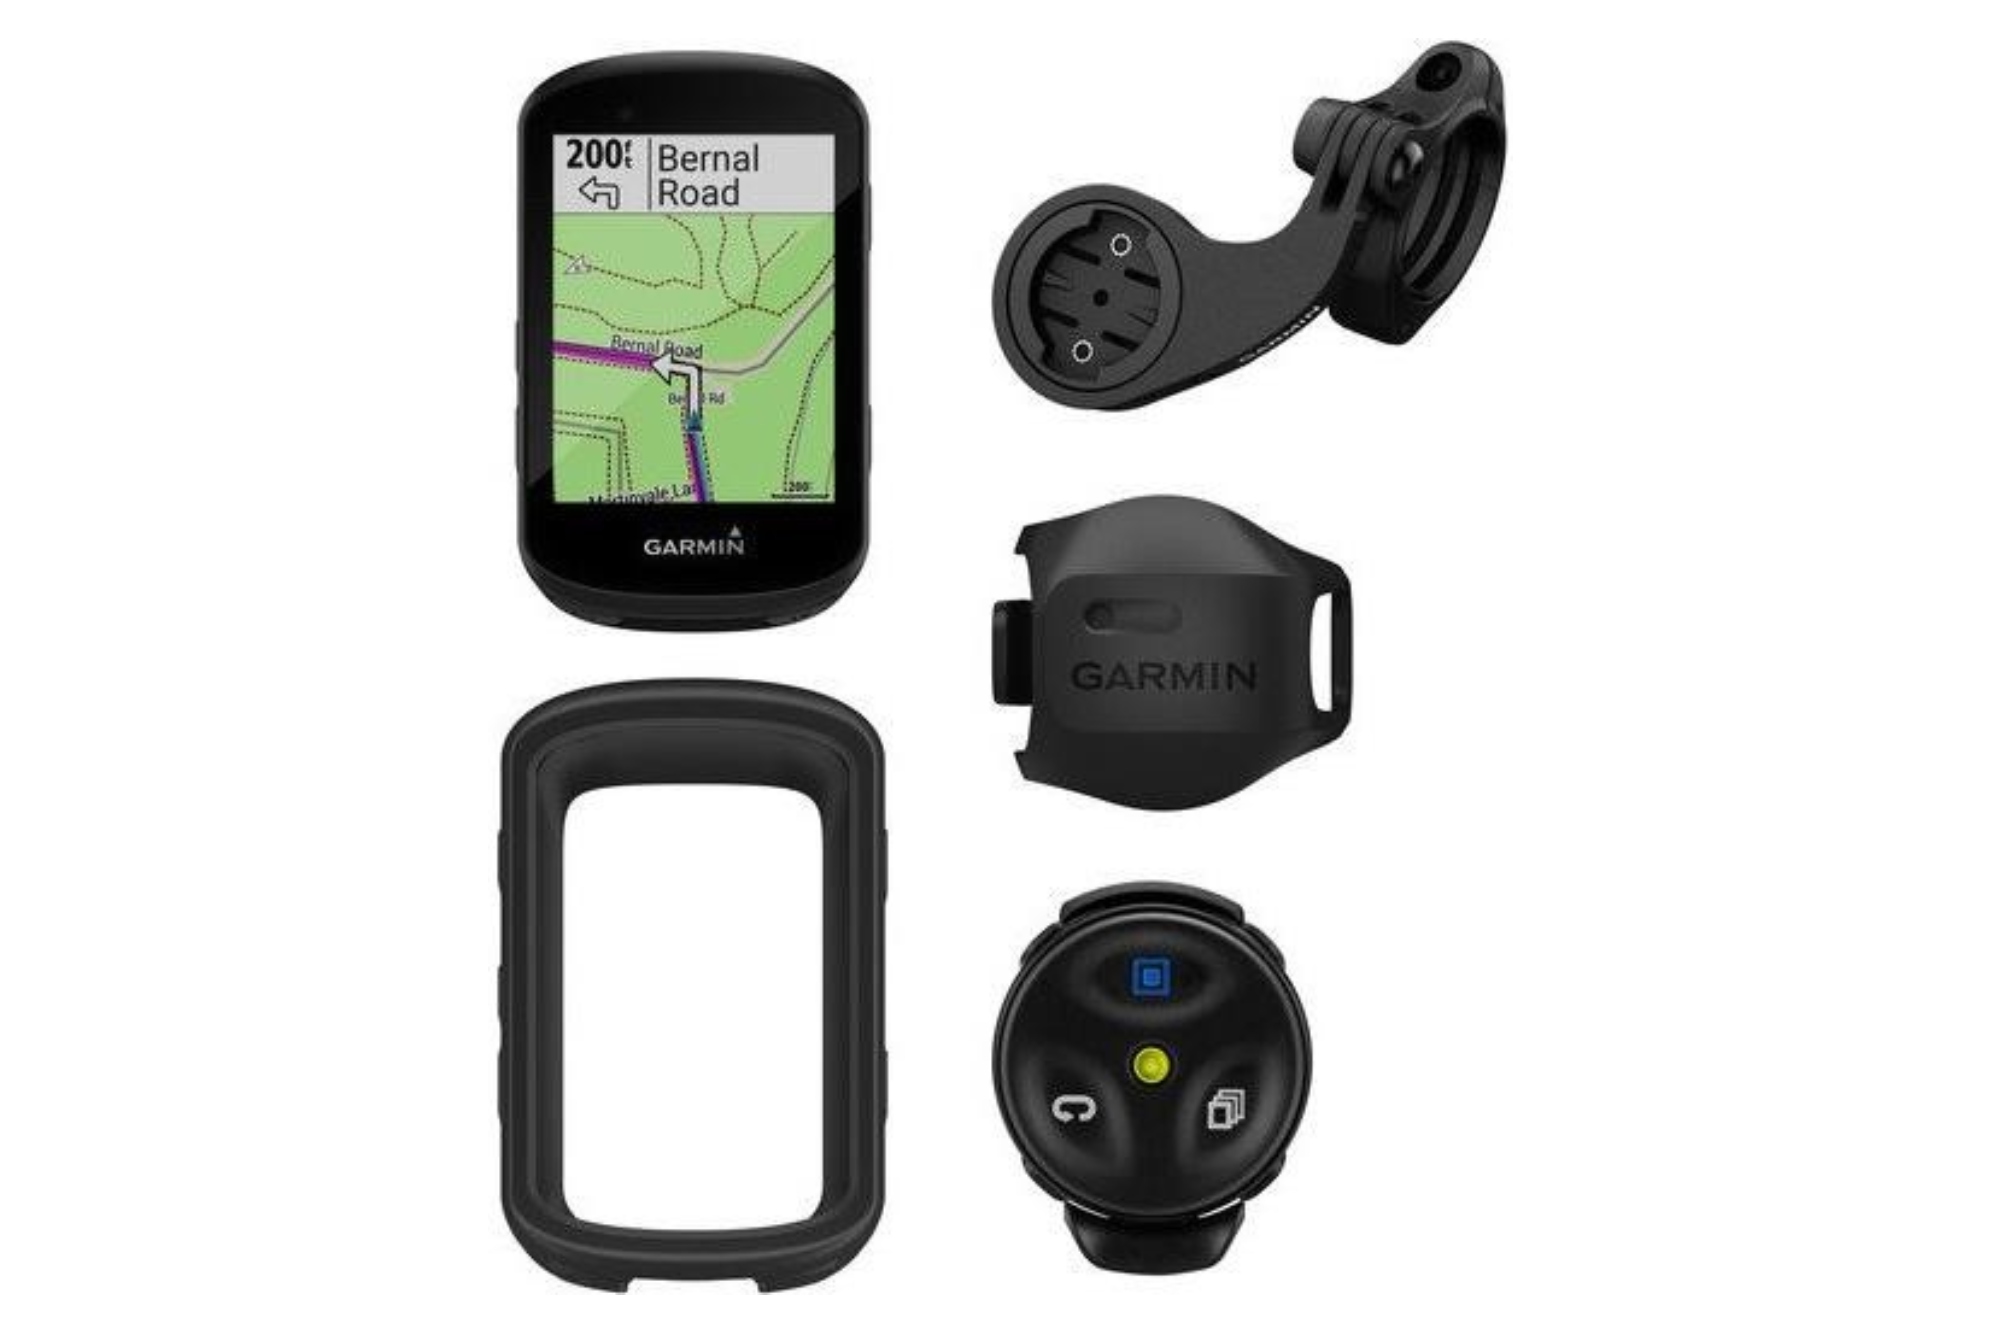 Garmin Edge 530 GPS Cycling Computer and mounts all on display